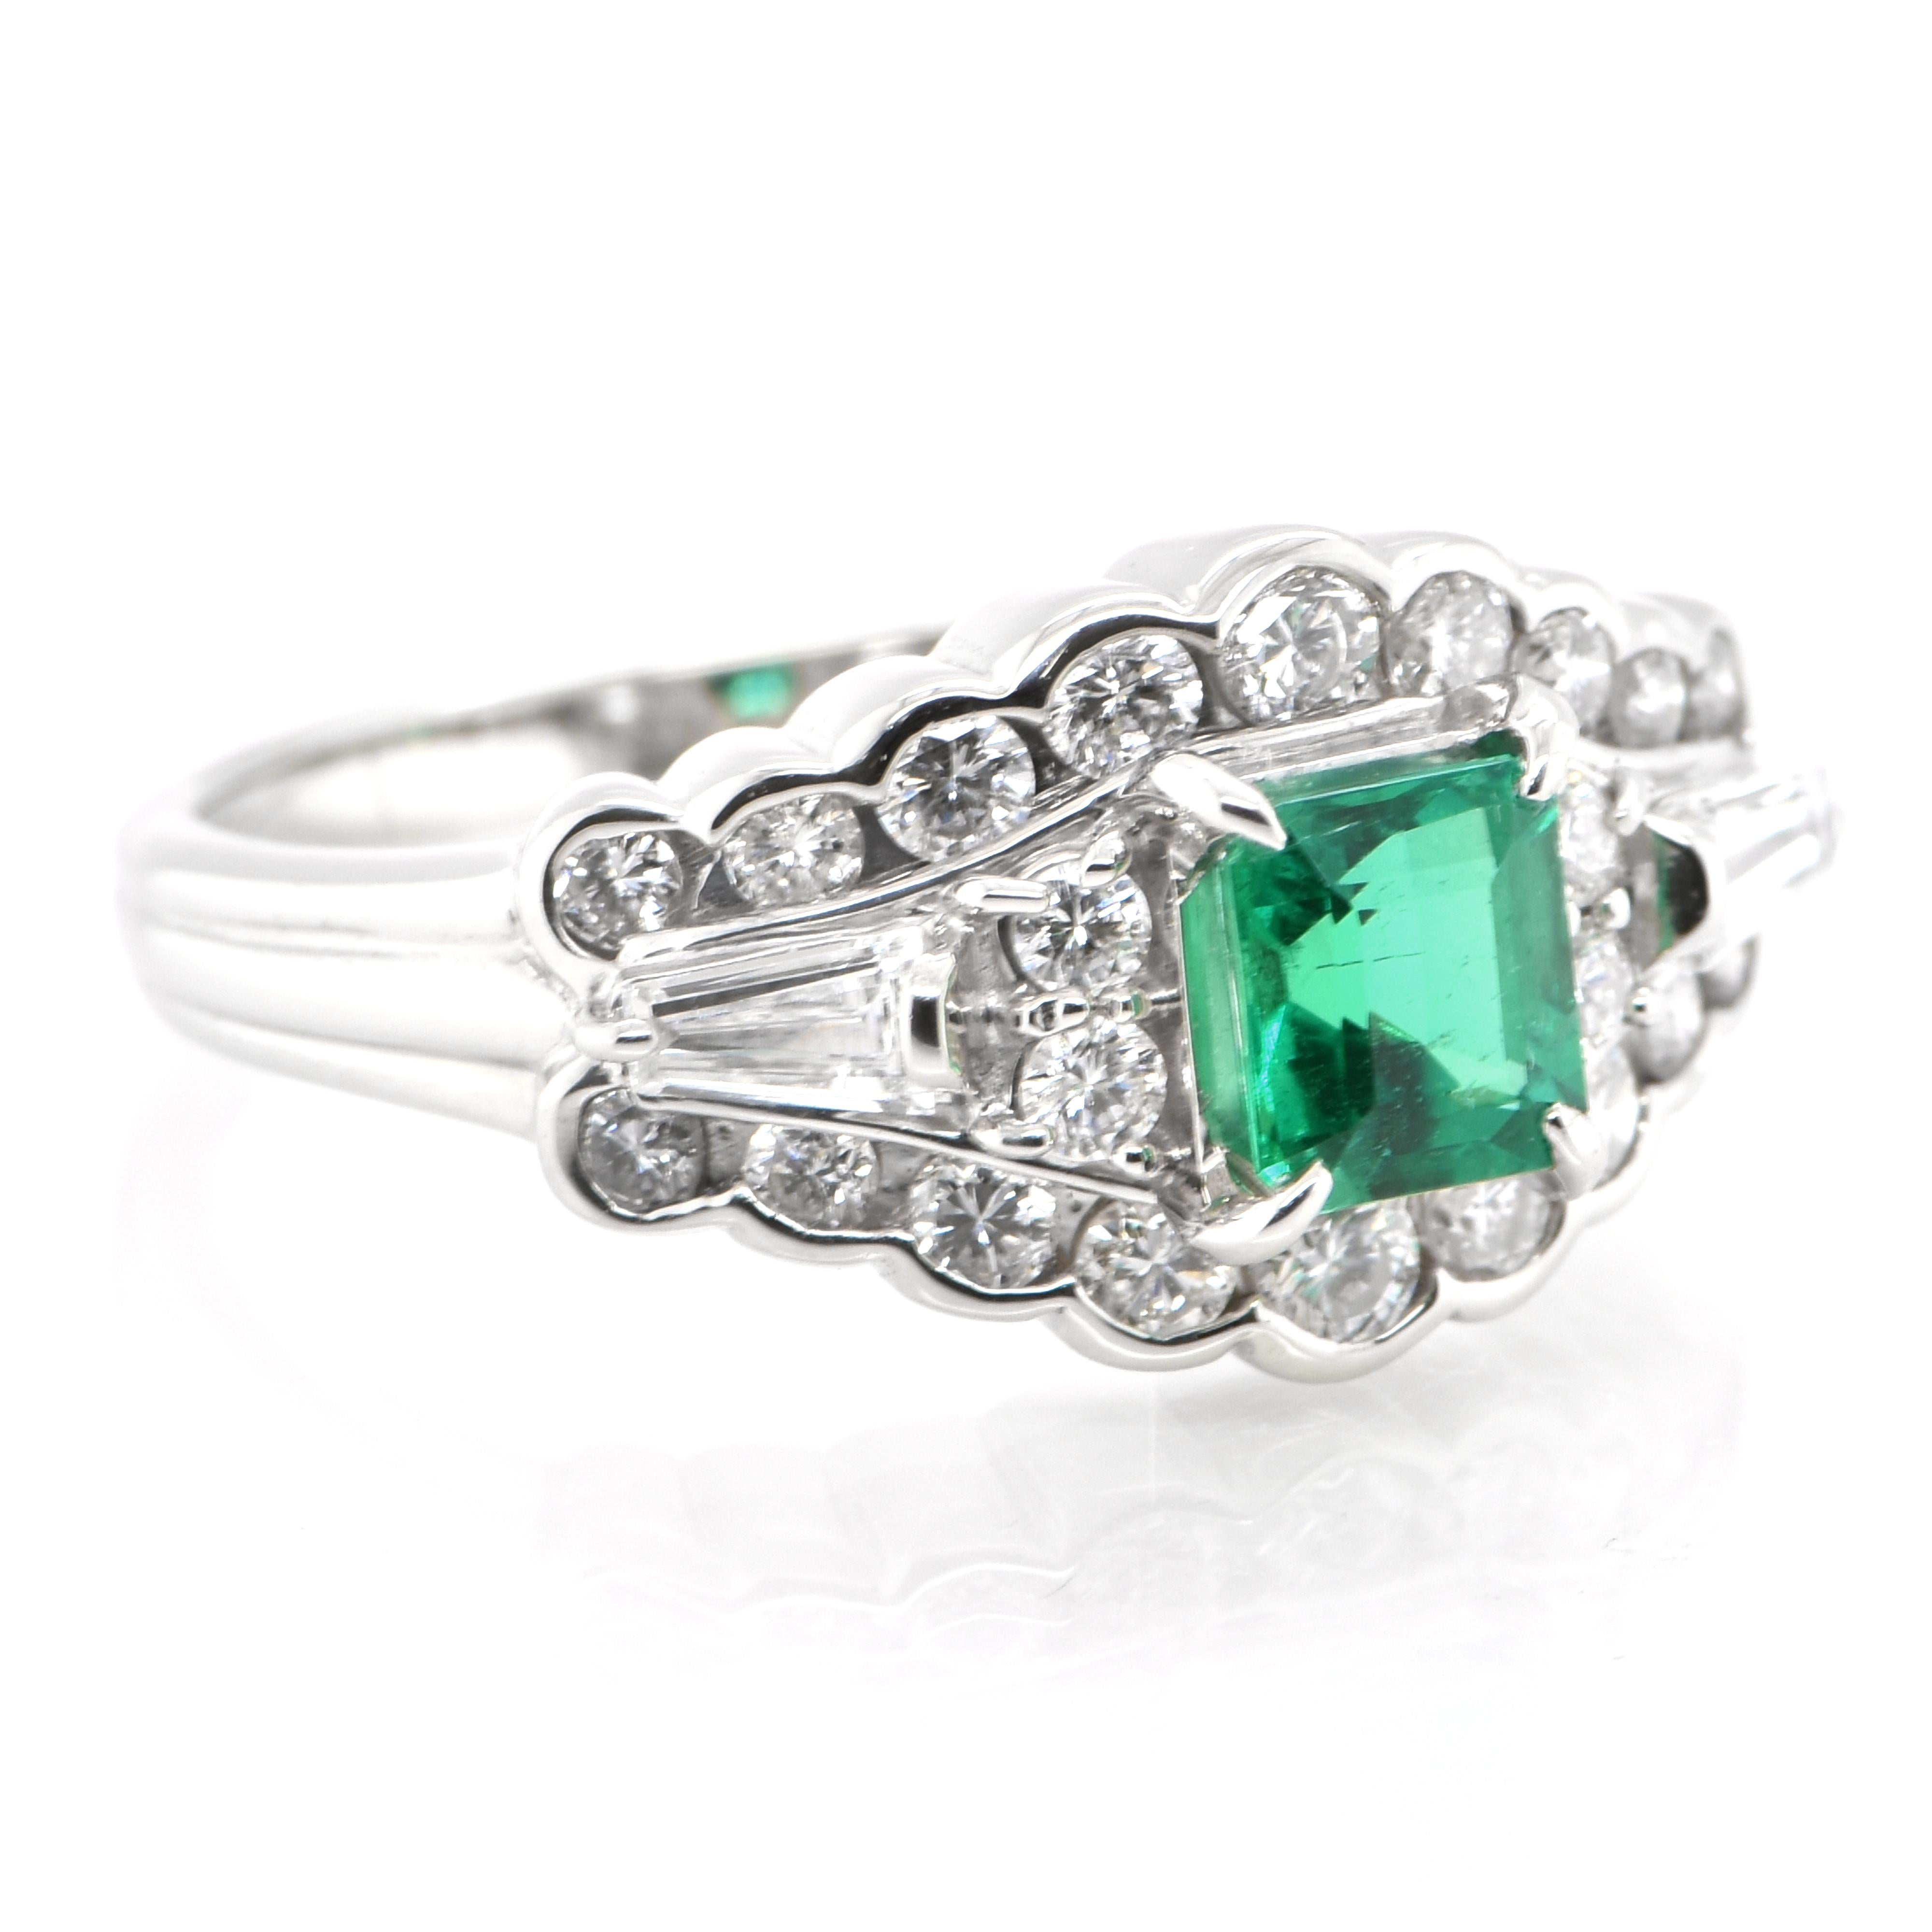 Modern 0.76 Carat Natural Emerald and Diamond Antique Ring Set in Platinum